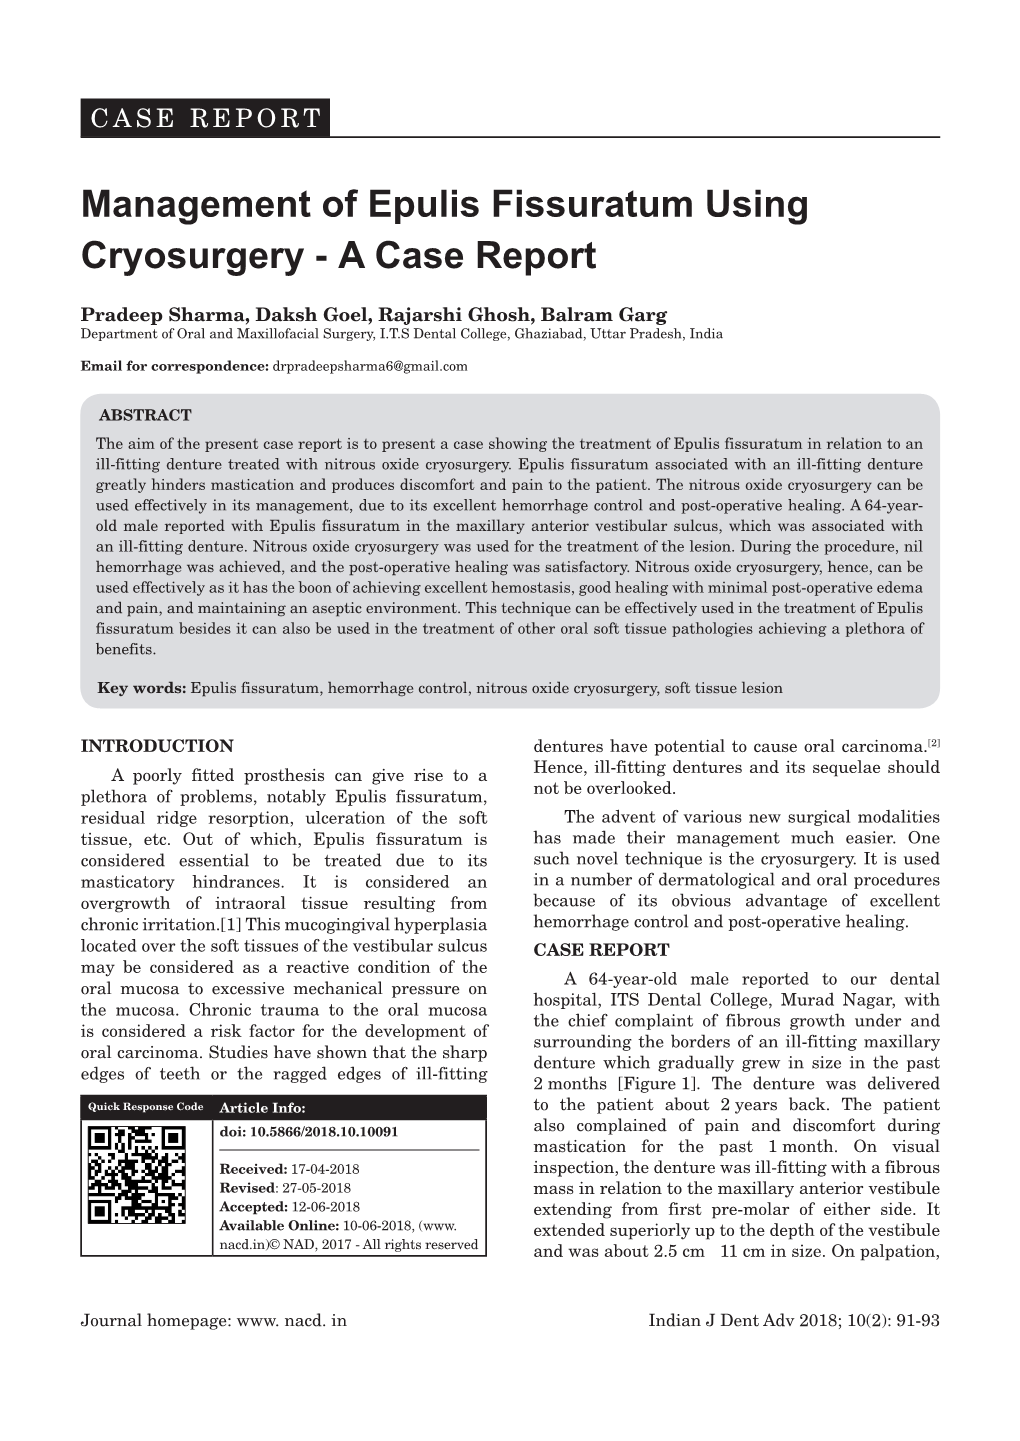 Management of Epulis Fissuratum Using Cryosurgery - a Case Report